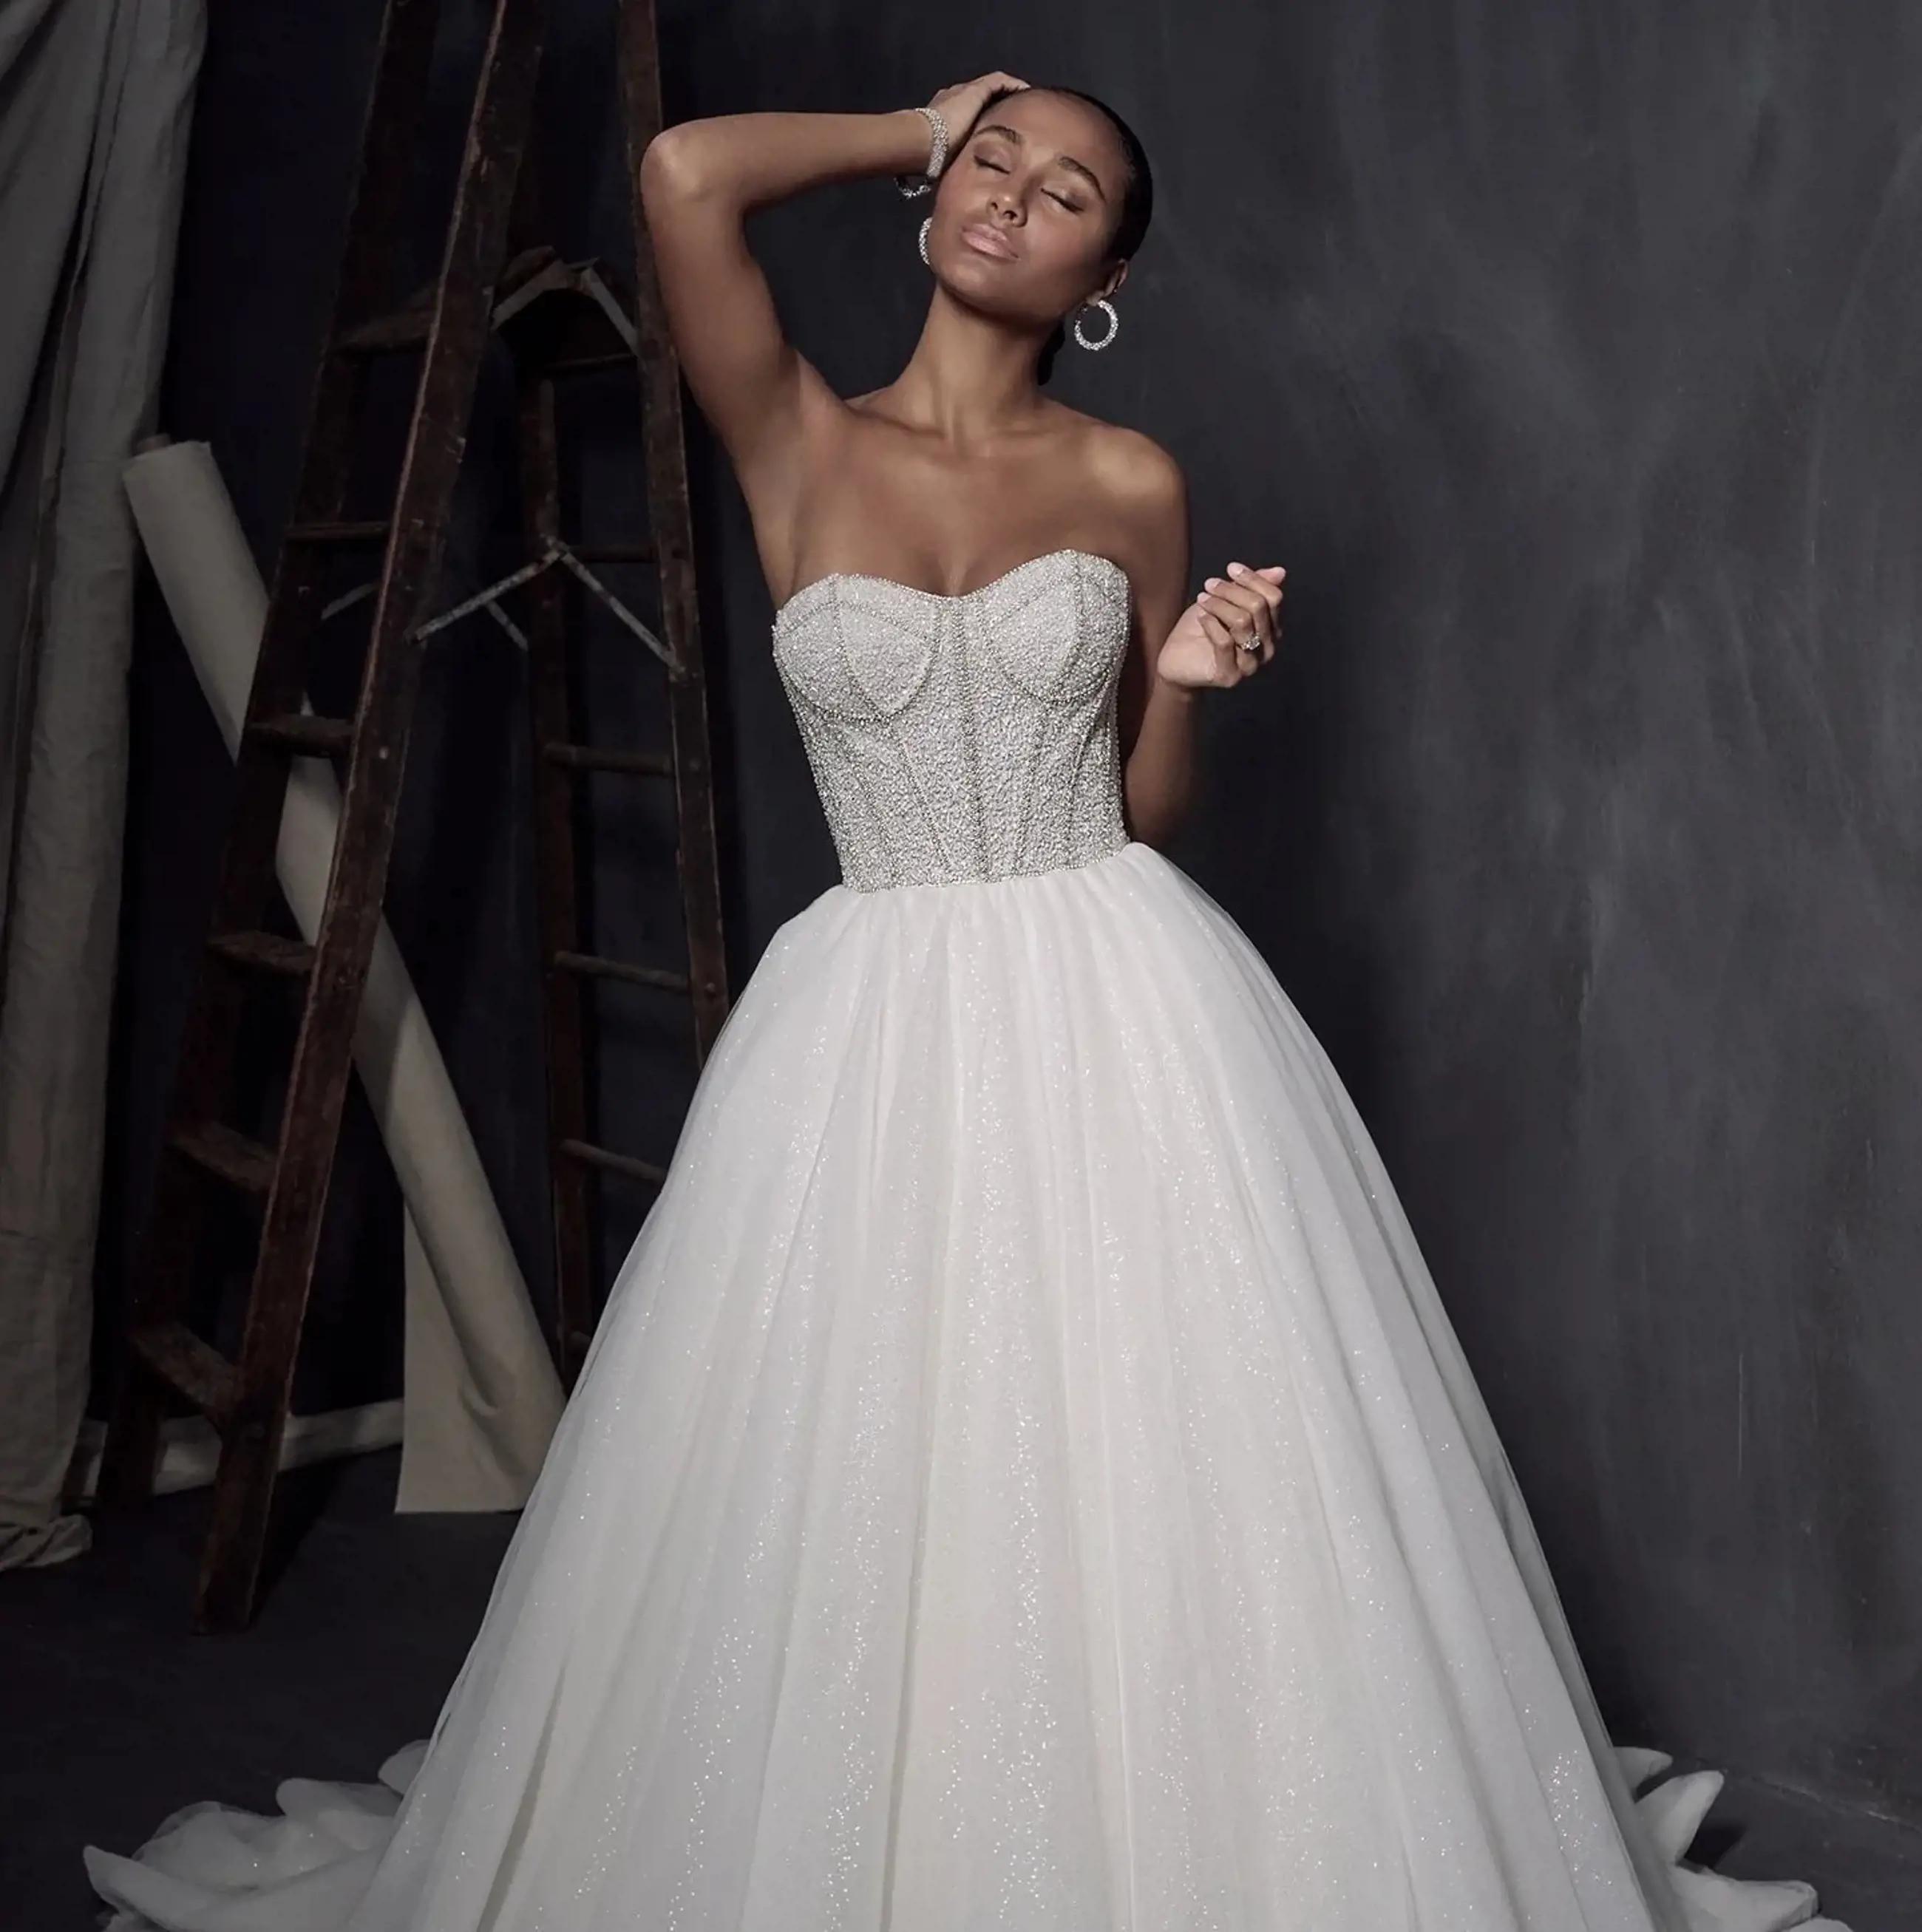 Wedding Dresses That Will Make You Feel Like a Princess! Image